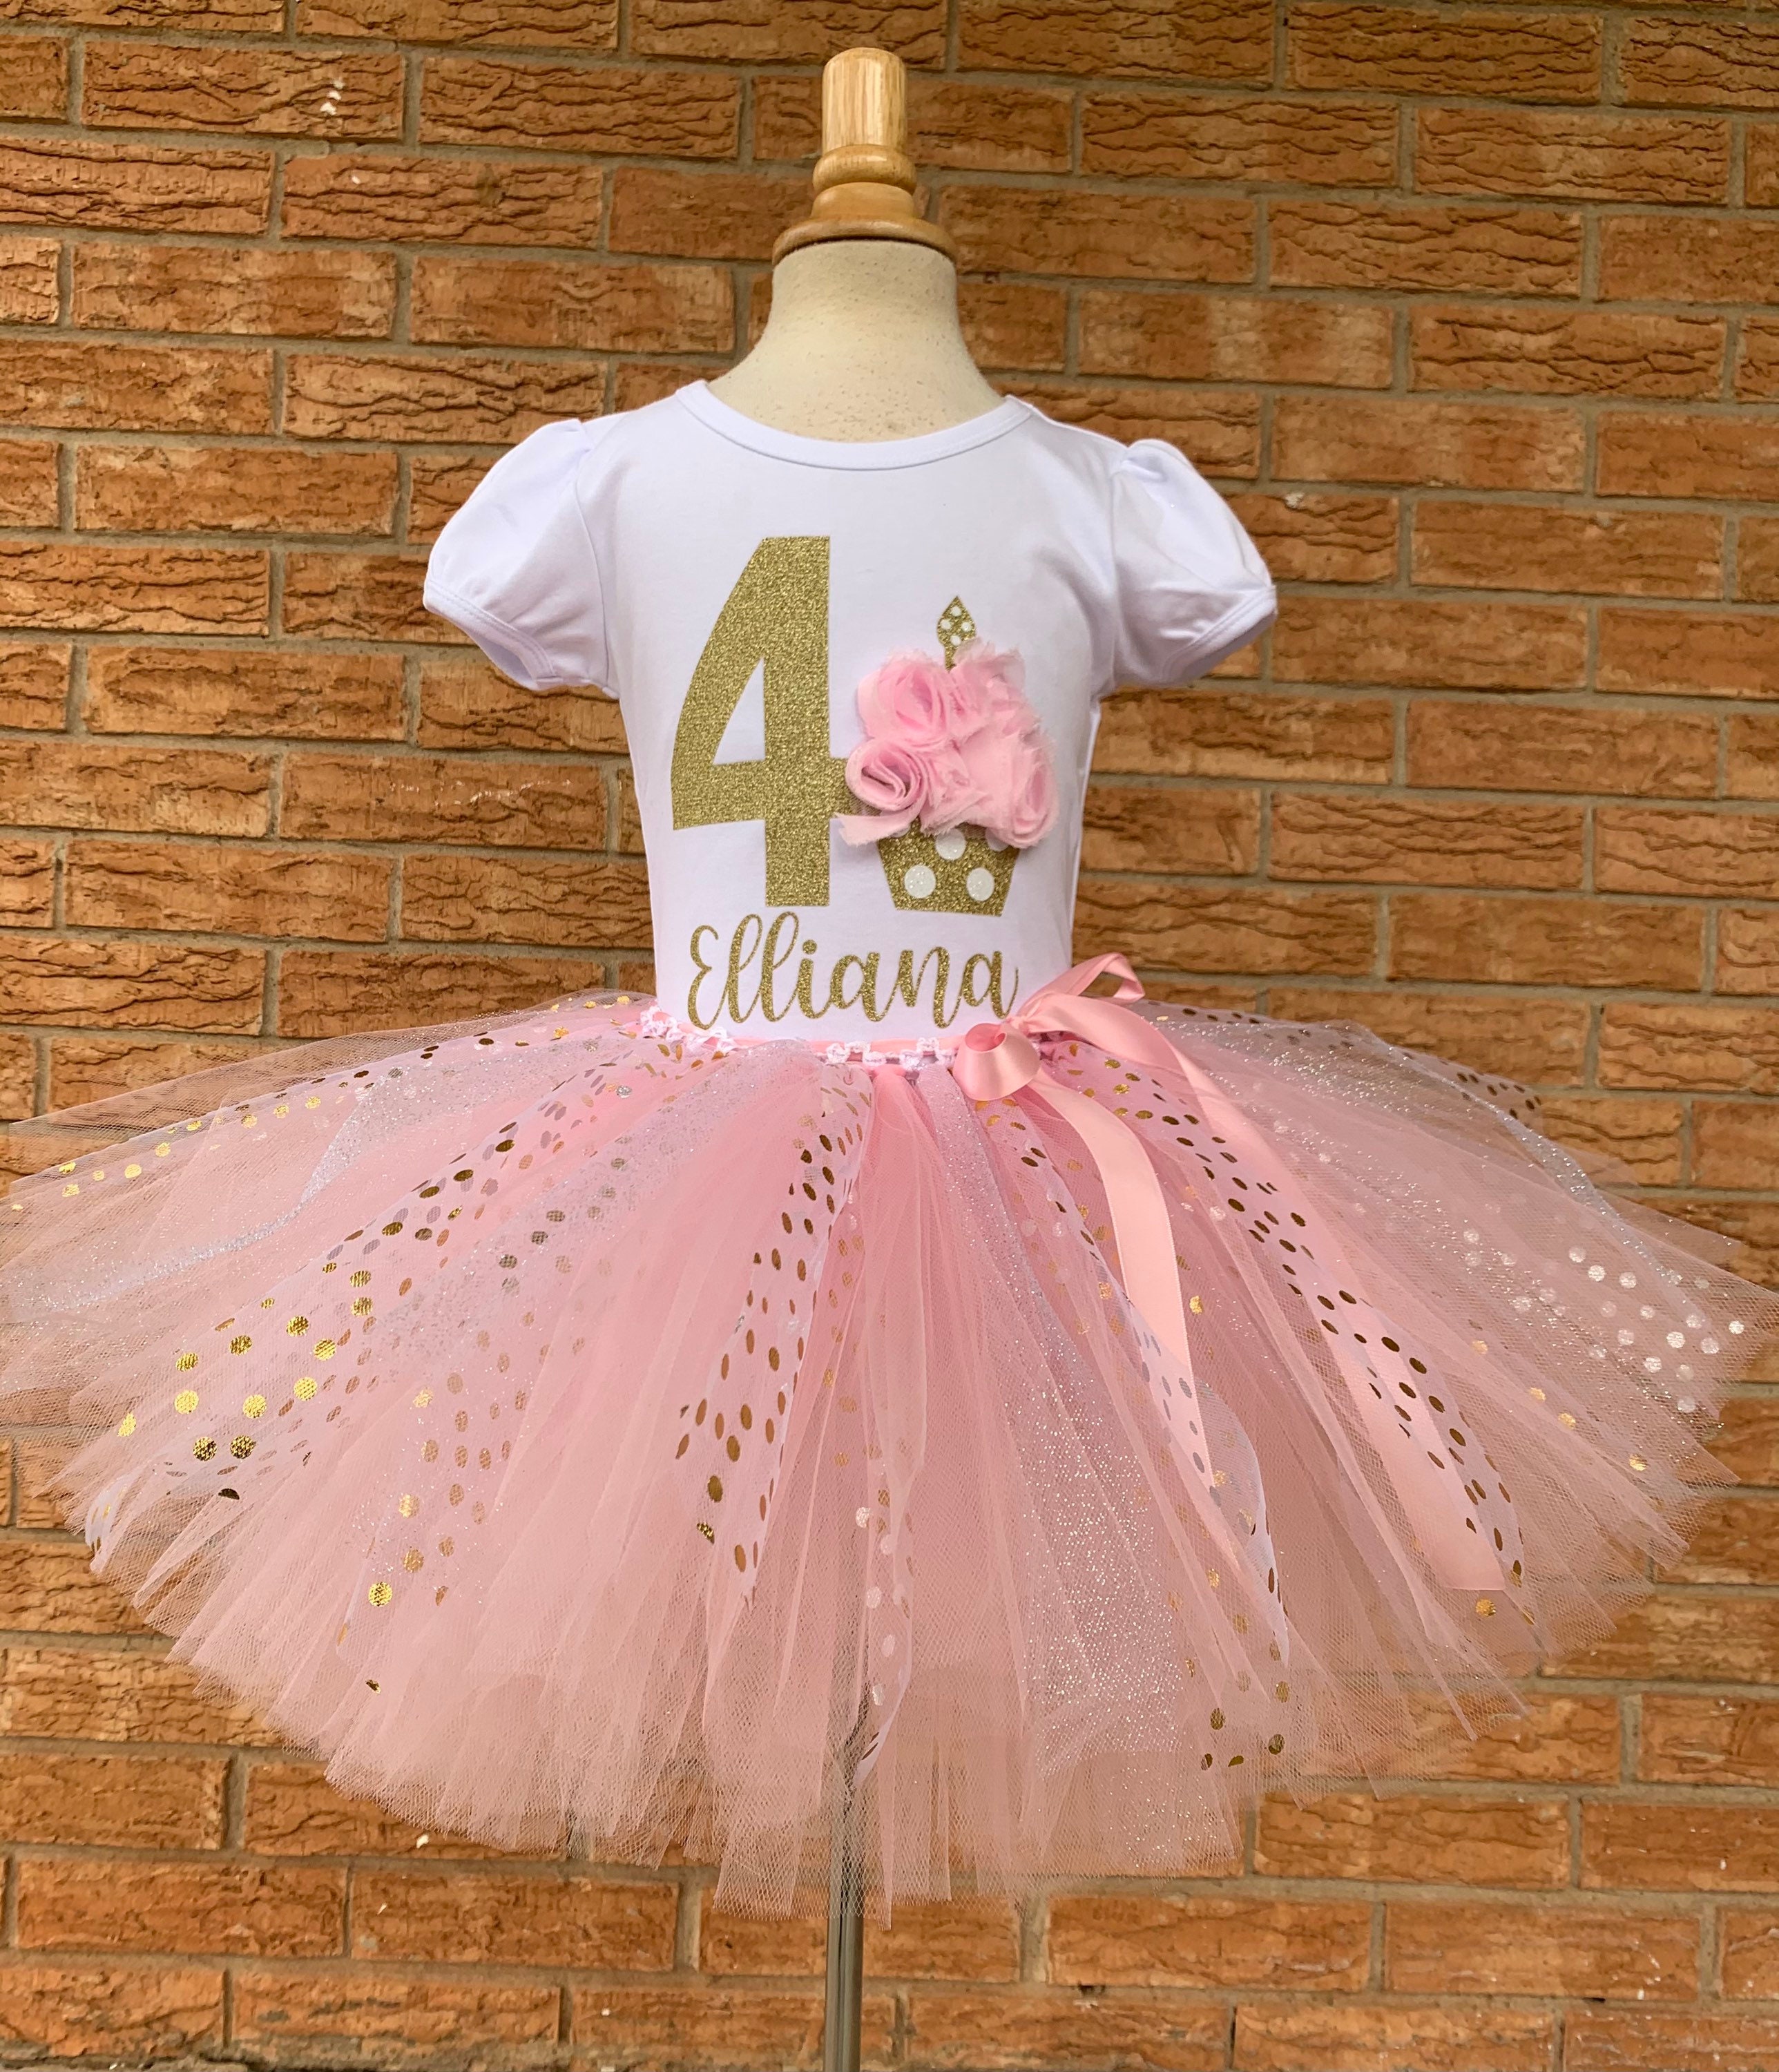 Bolsa de tela con la obra «I'm 4 unicorn birthday 4 años cumpleañero  camiseta idea de regalo cuarto cumpleaños niña» de Jelisandie